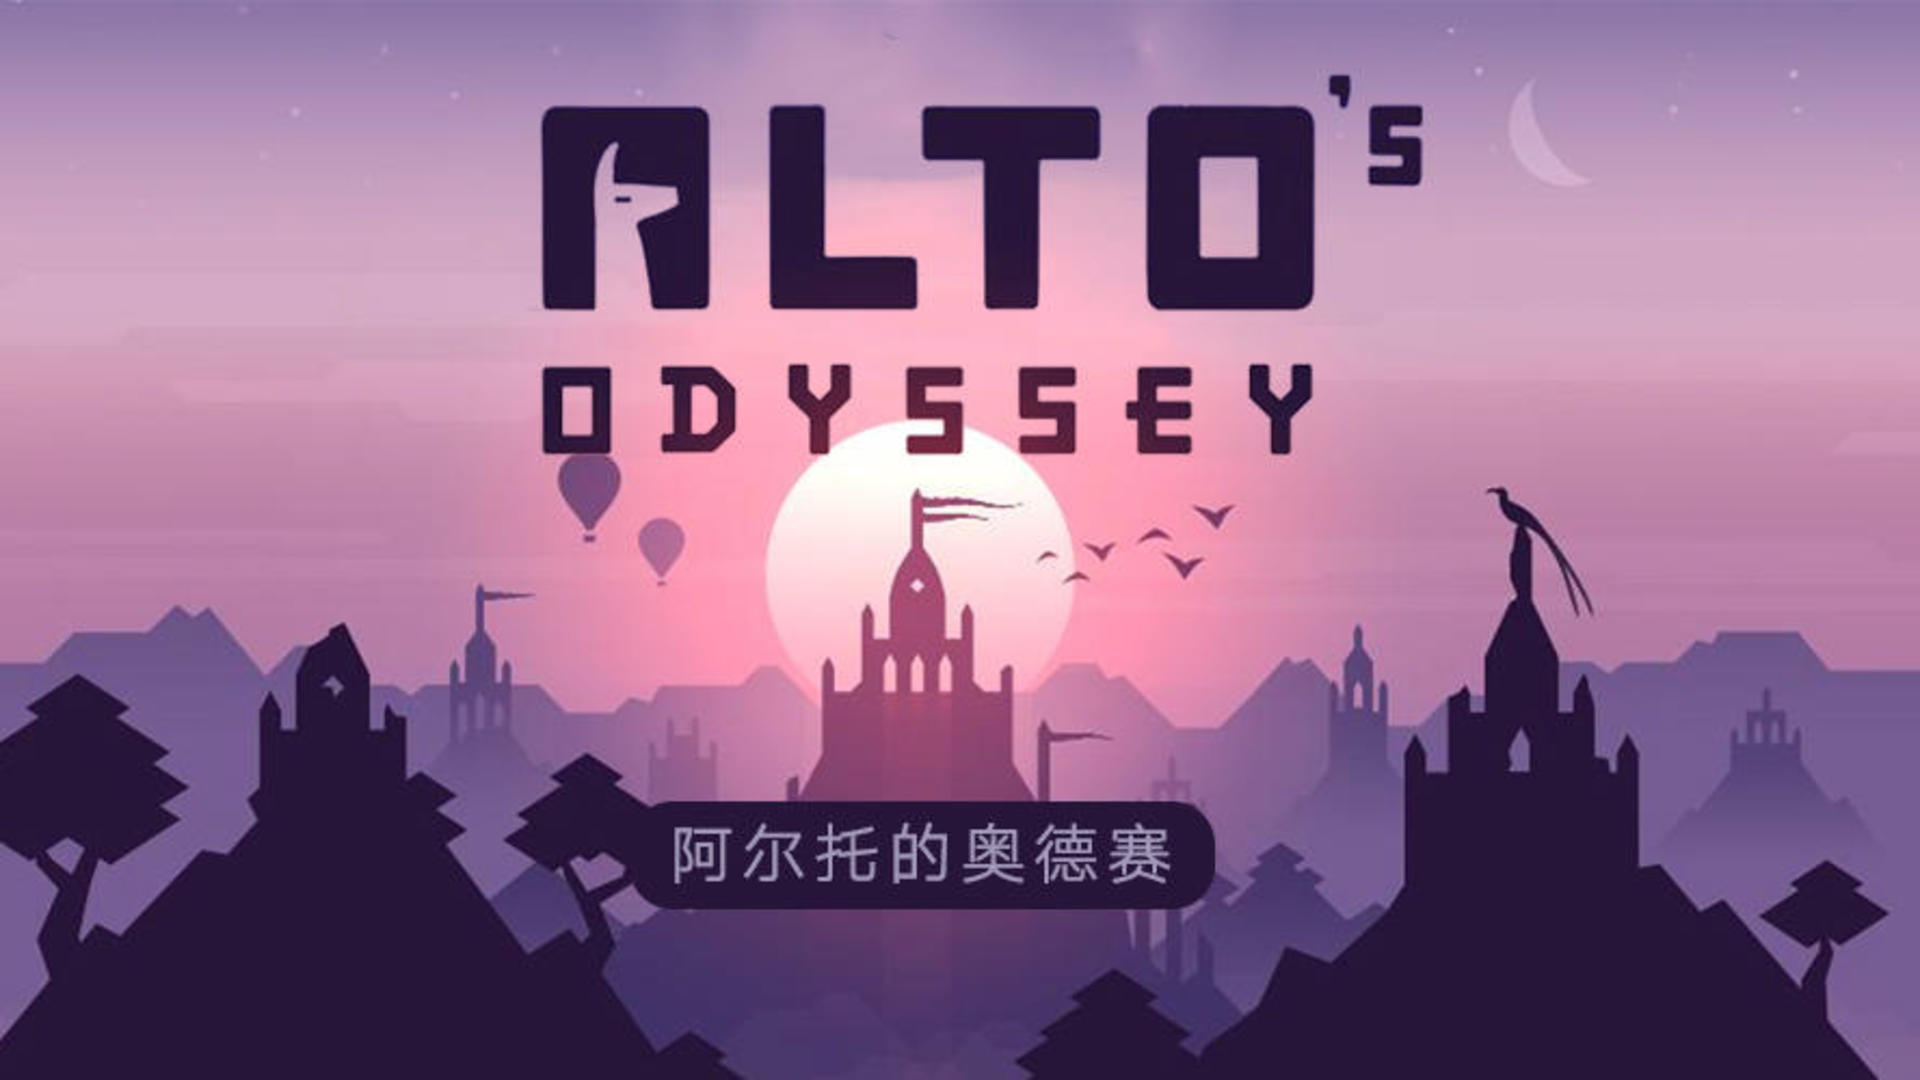 Alto's Odyssey